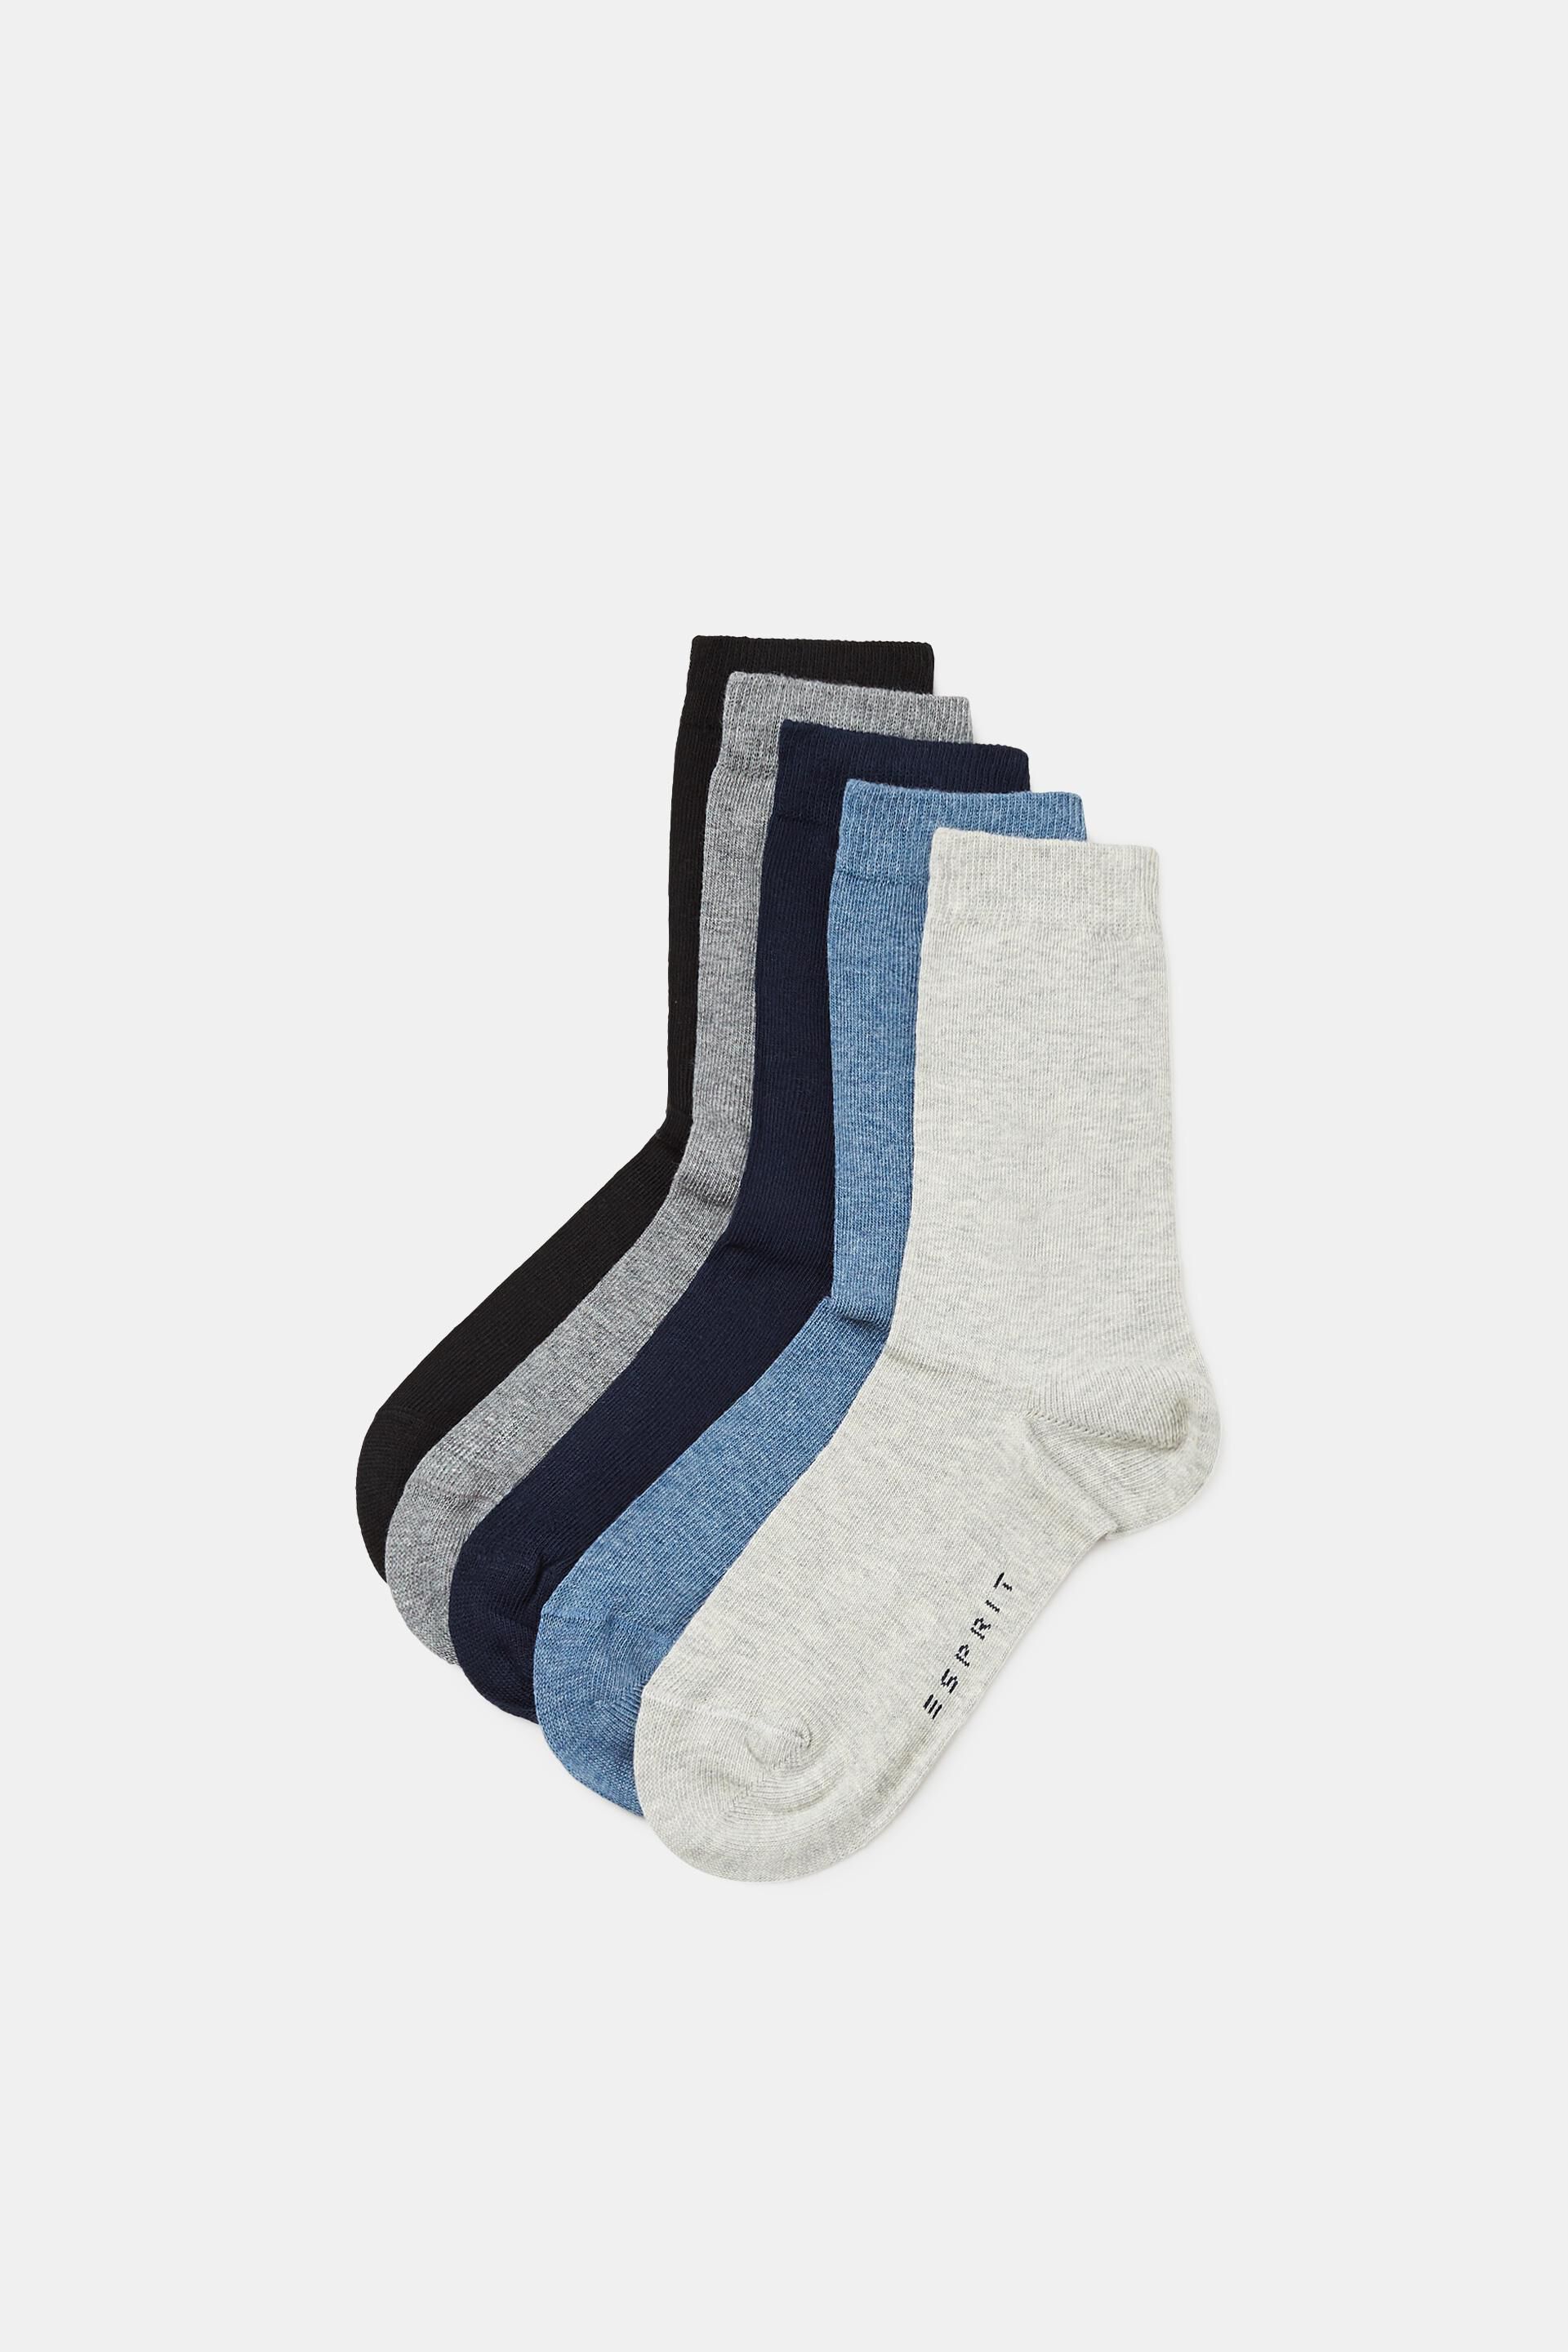 Esprit of socks Five pack plain-coloured